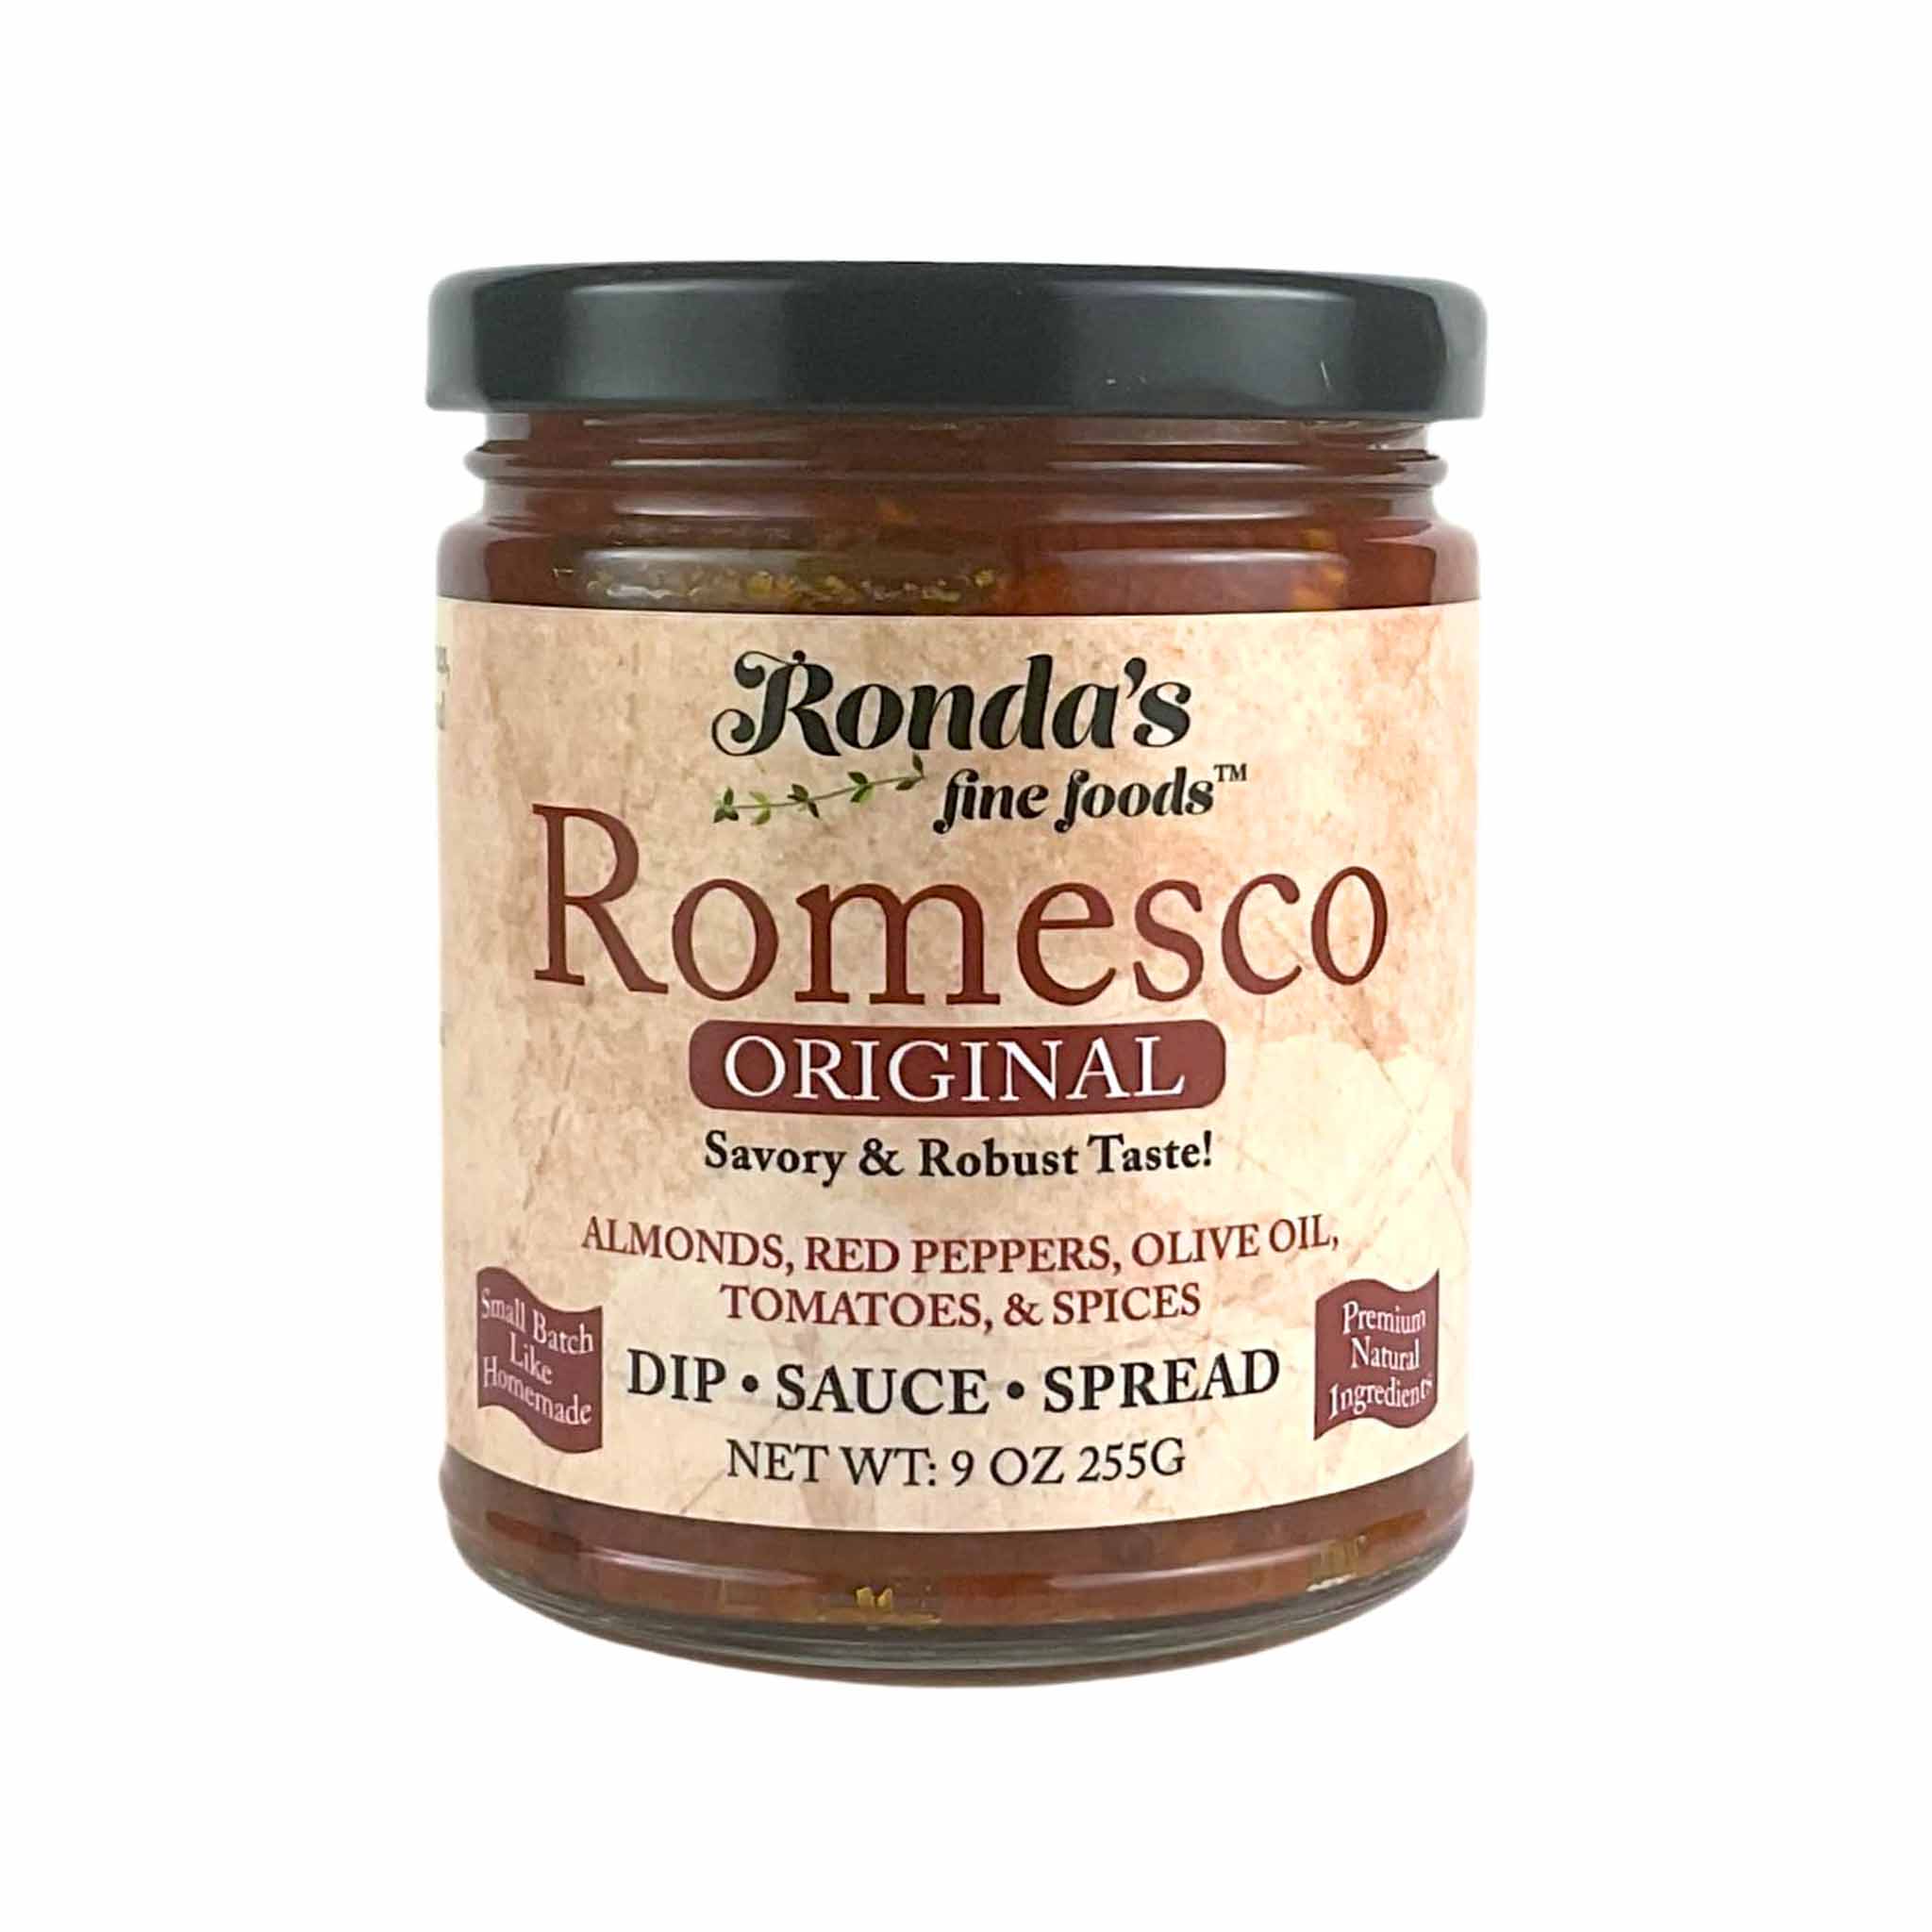 Rondas Romesco Original Dip Sauce Spread